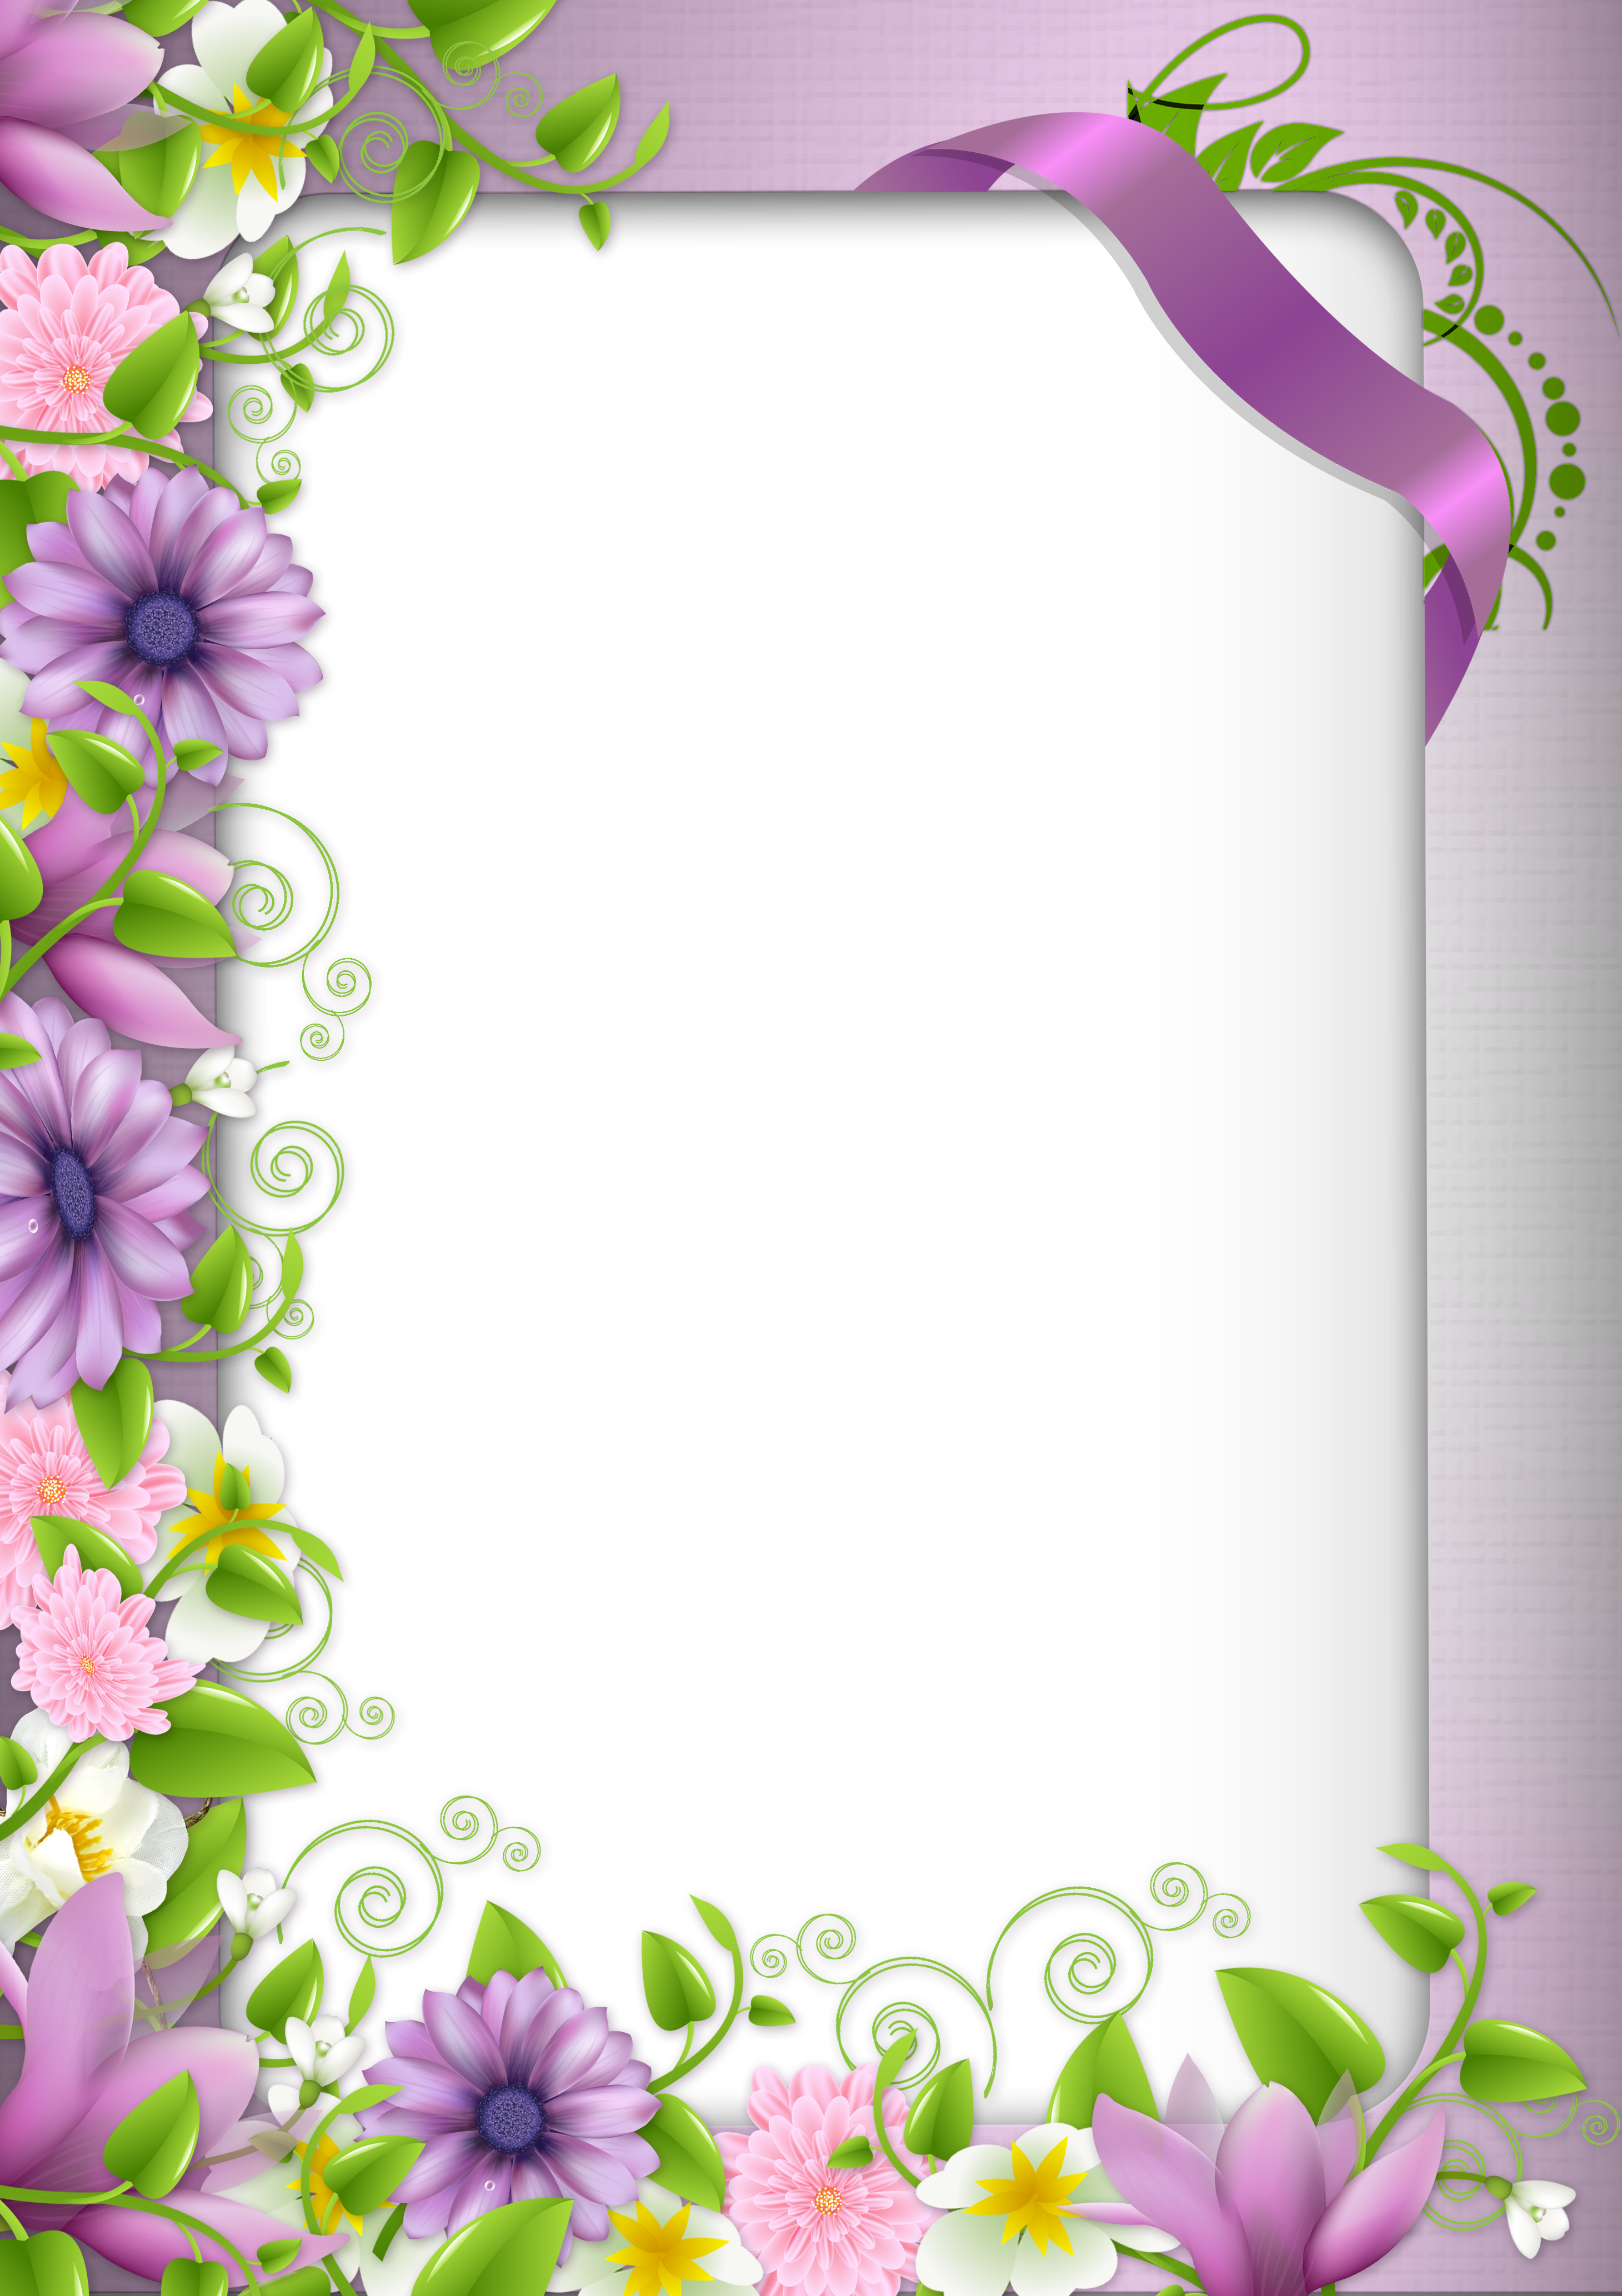 lavender clipart name tag frame